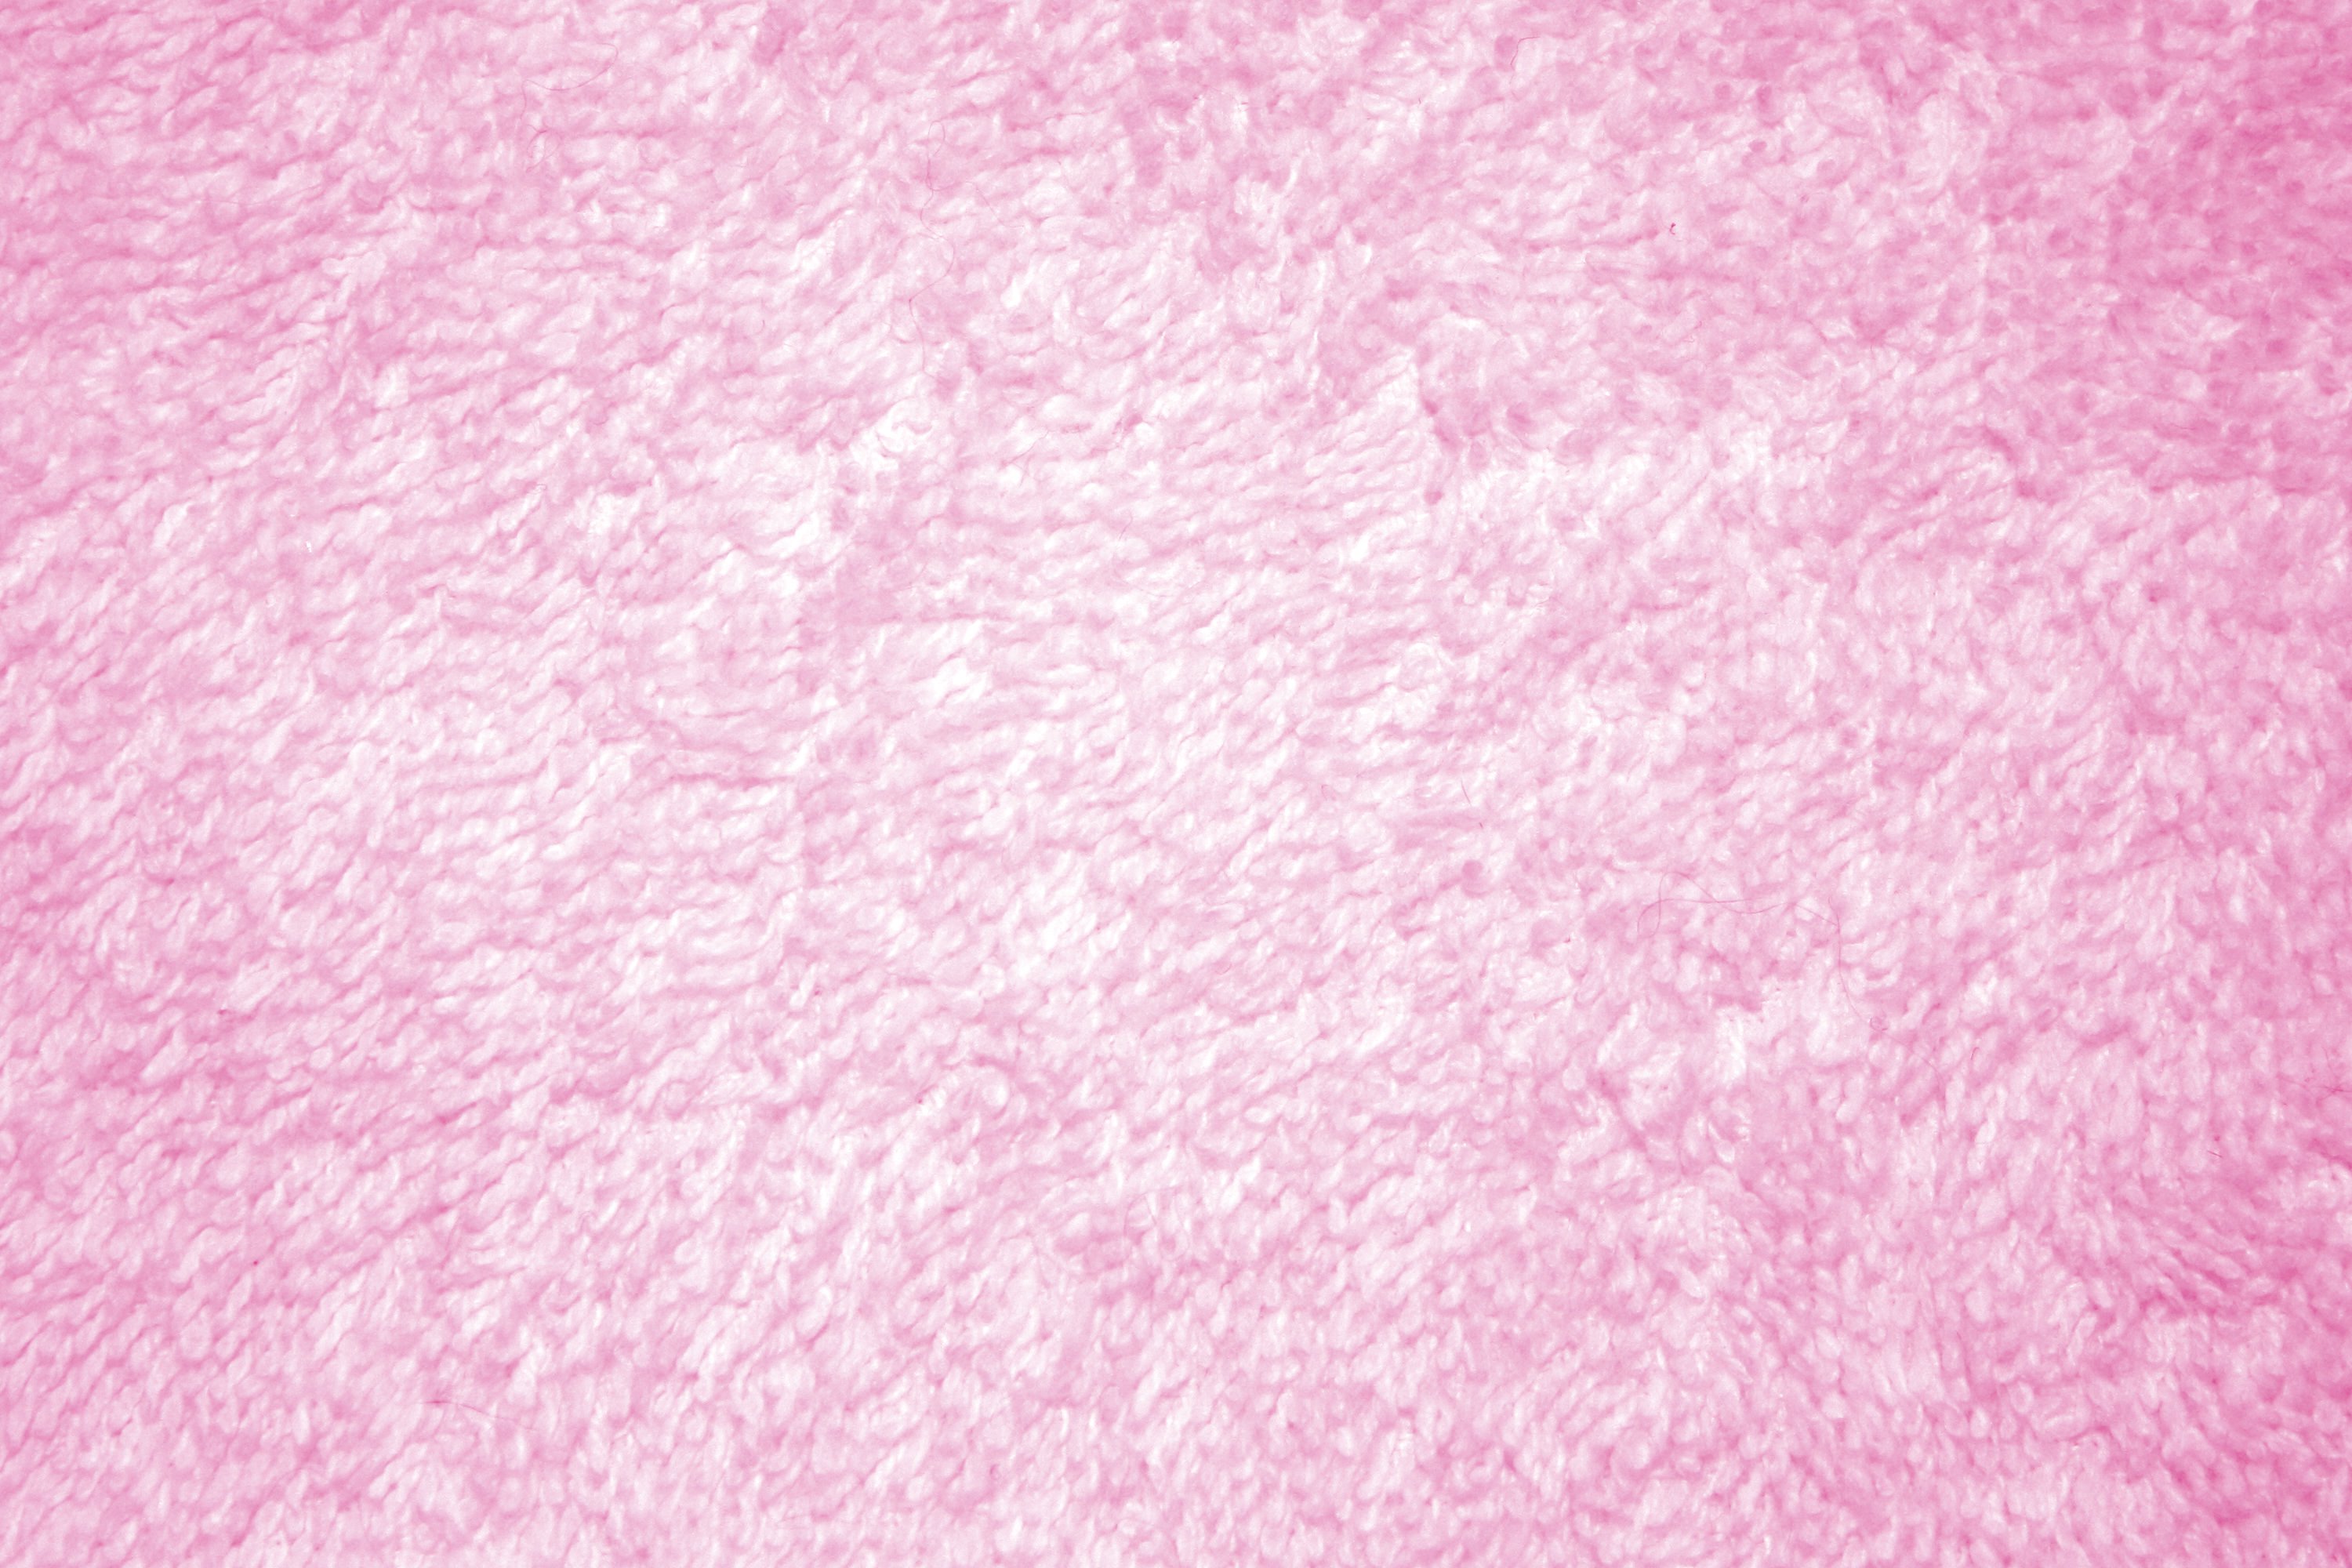 Pink Terry Cloth Texture Picture Photograph Photos Public